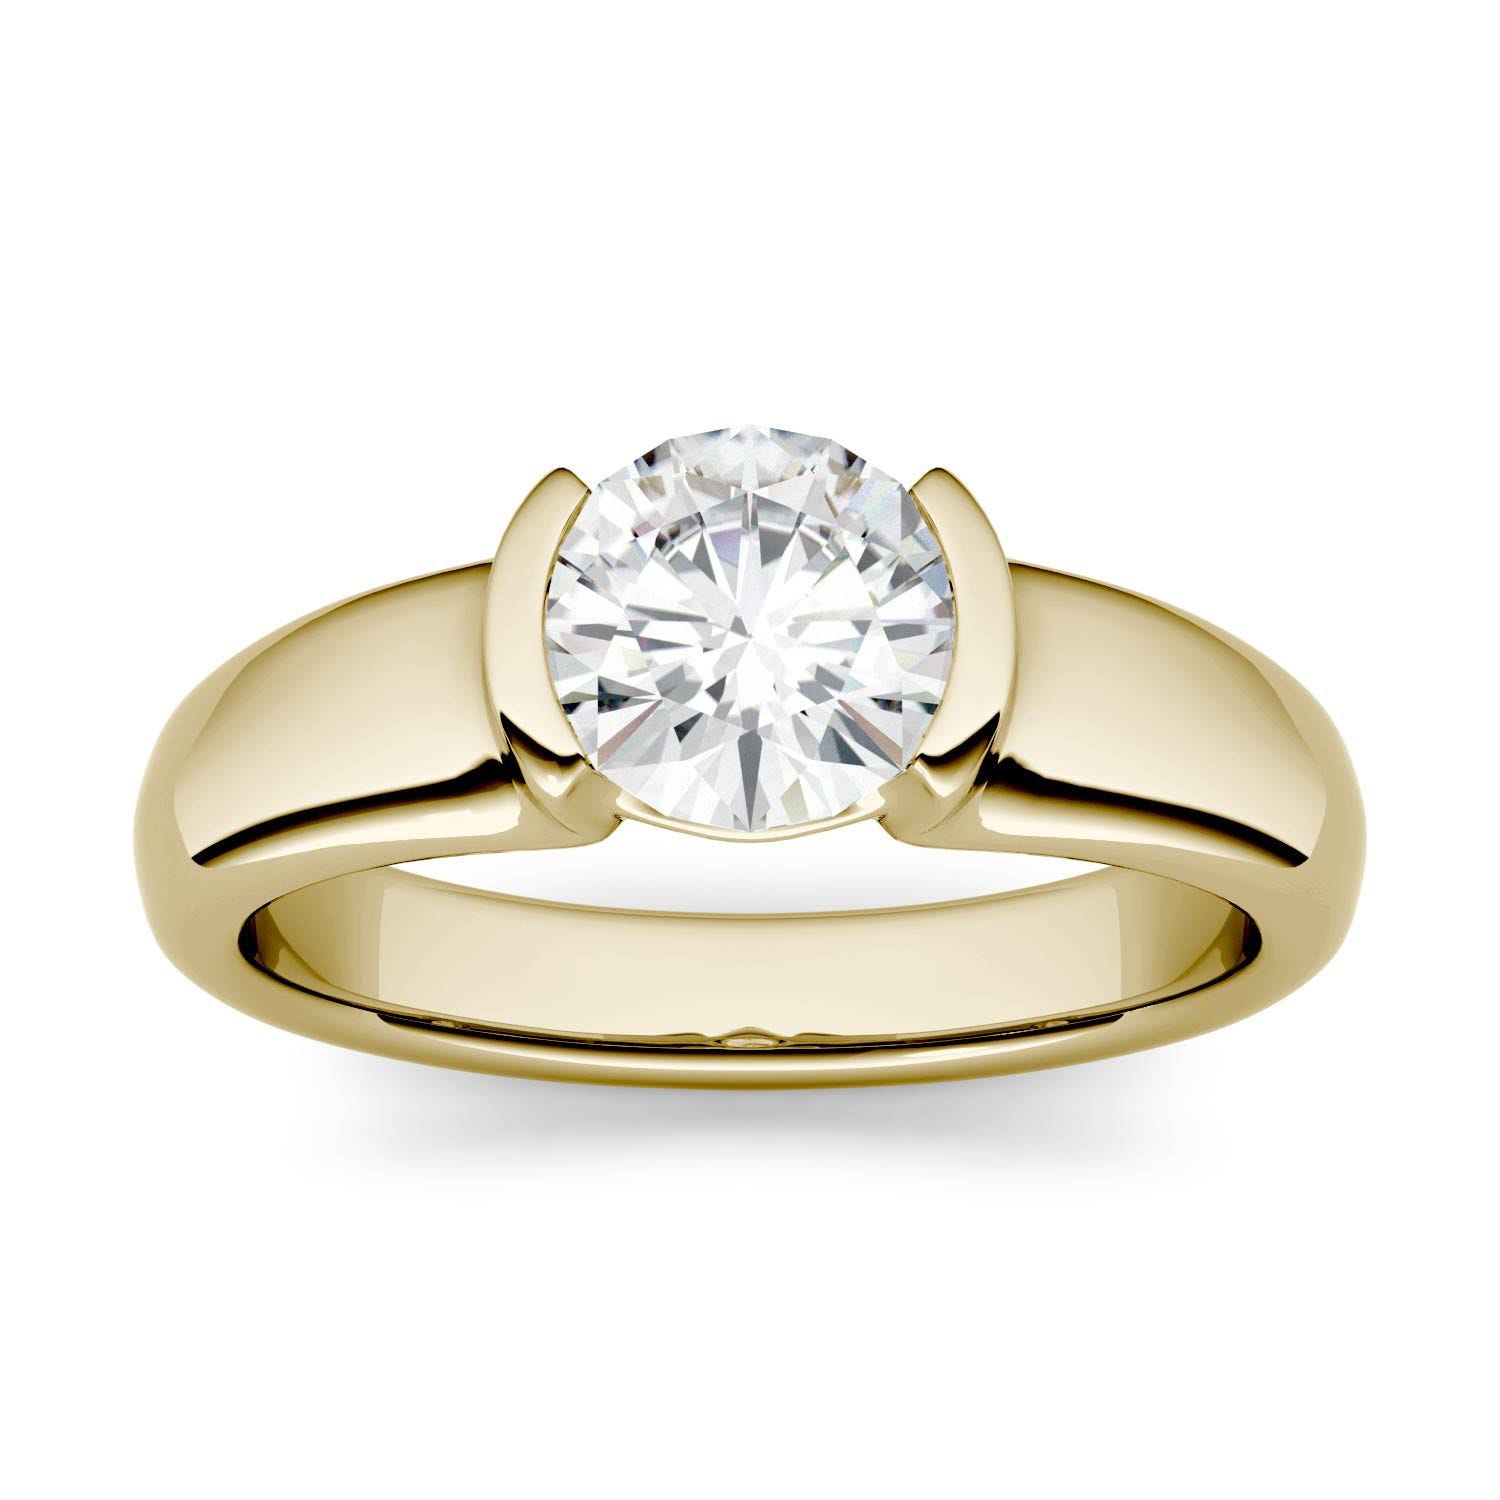 SOLD: 3.02ct Radiant Cut Half Bezel Engagement Ring